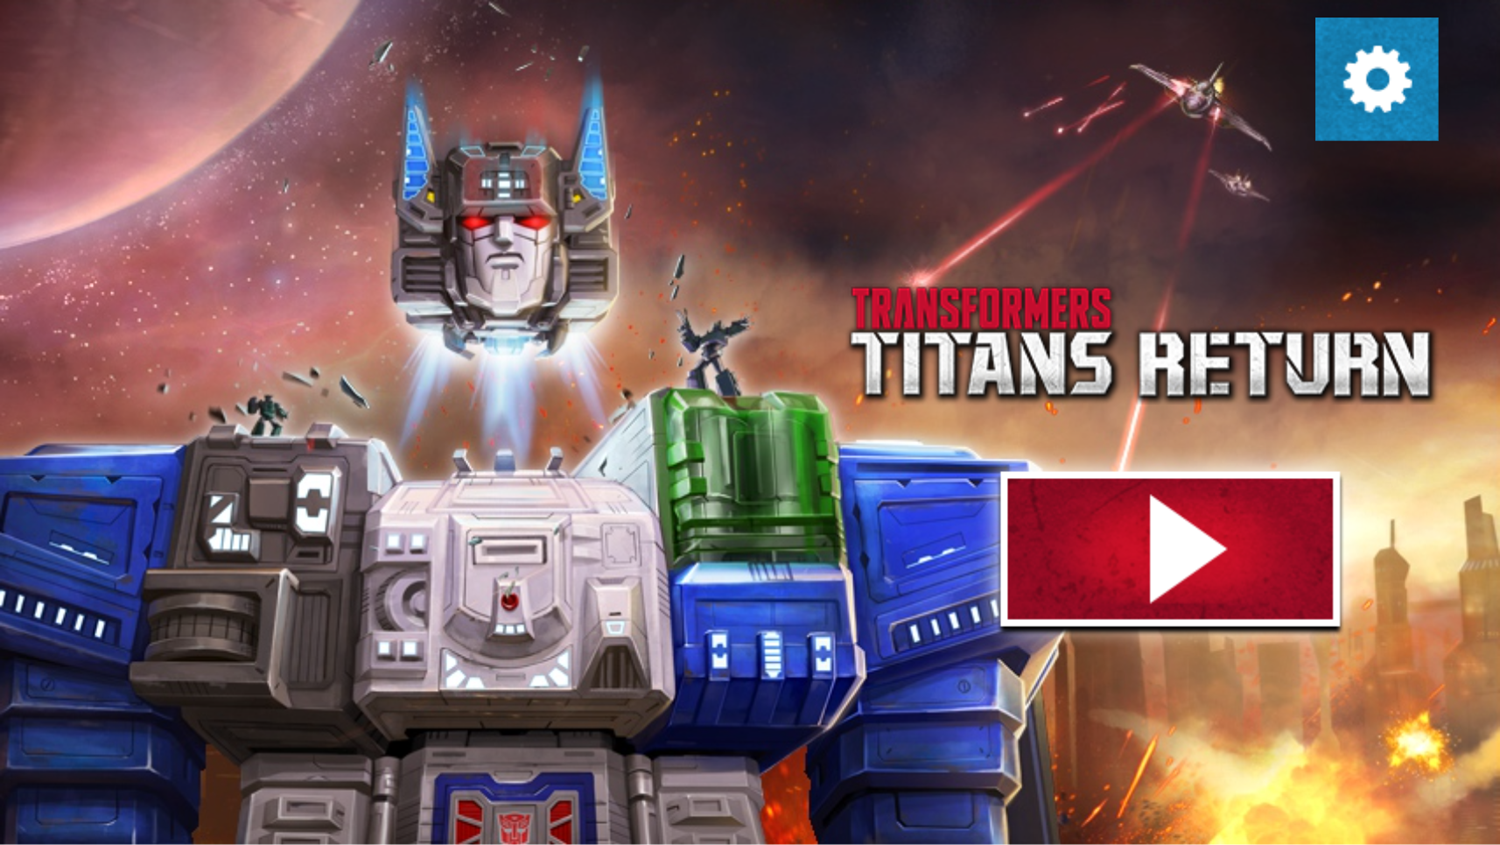 Transformers Titans Return Game Welcome Screen Screenshot.